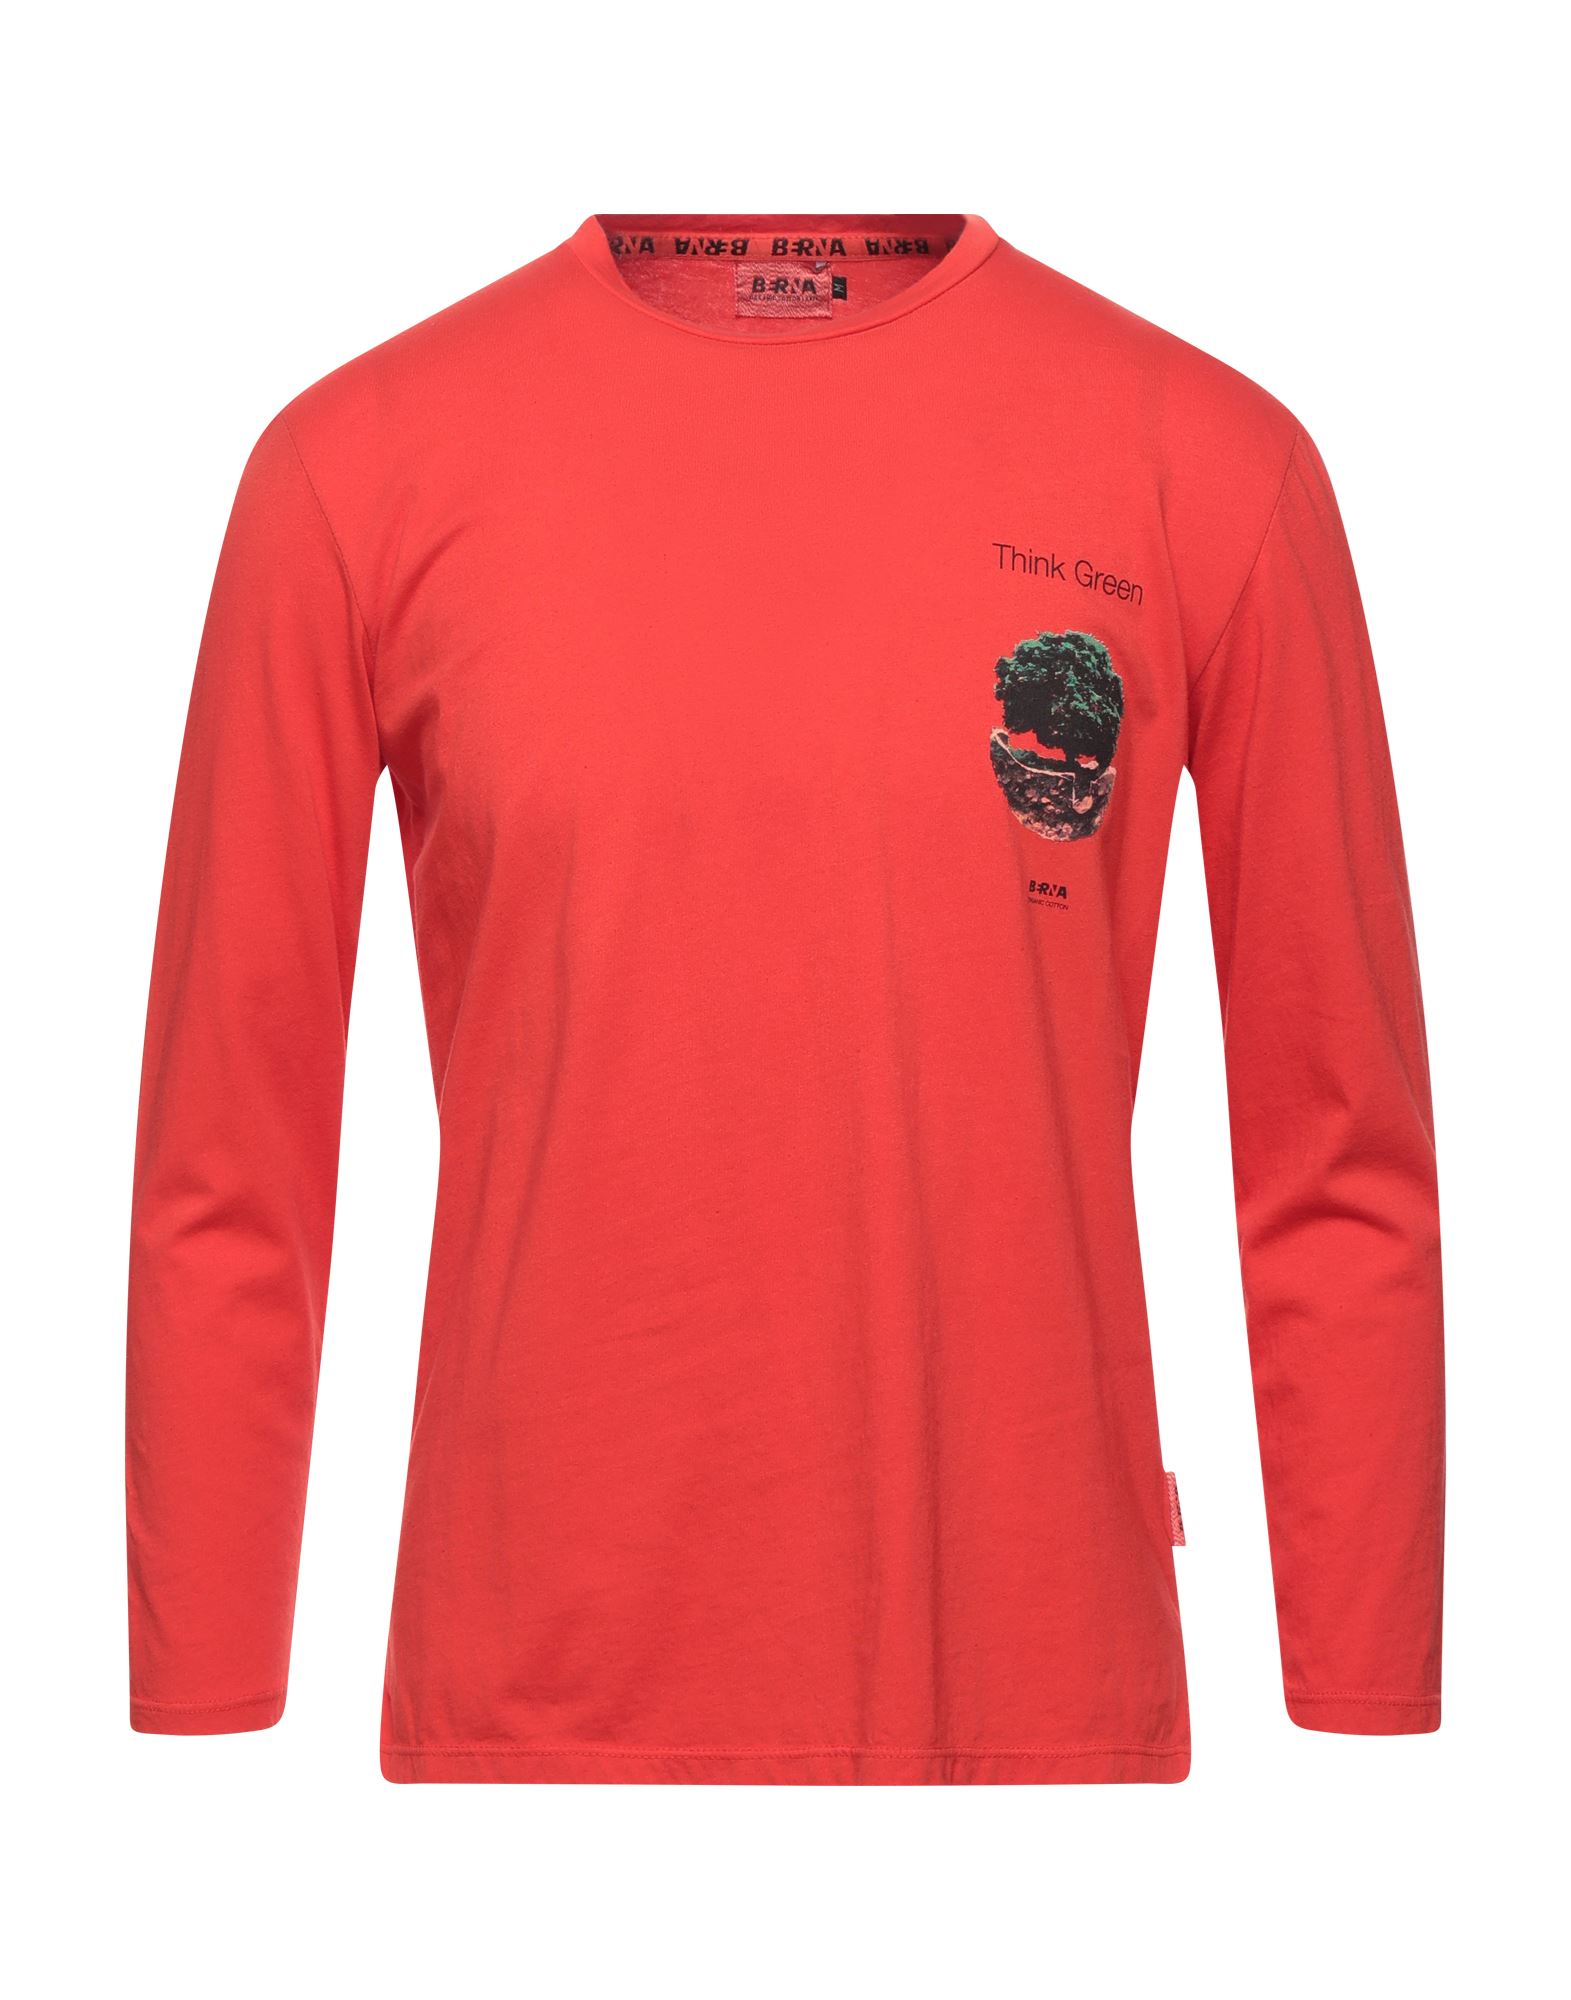 BERNA T-shirts Herren Rot von BERNA